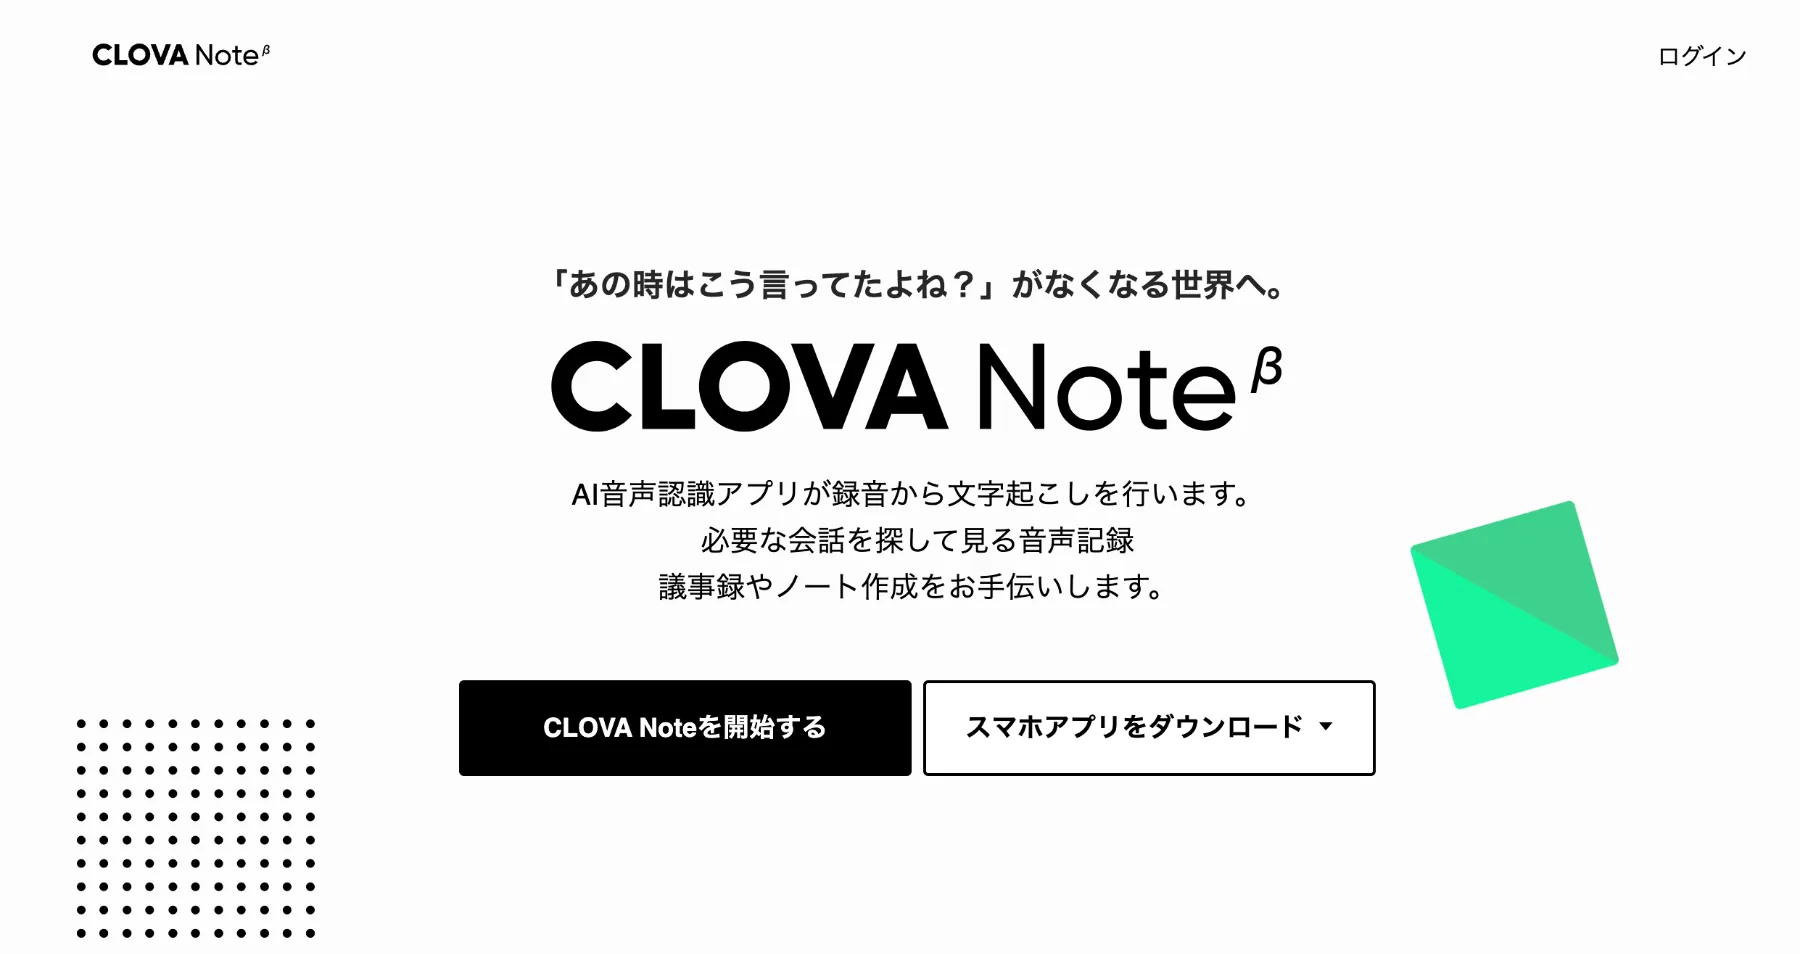 CLOVA Note β